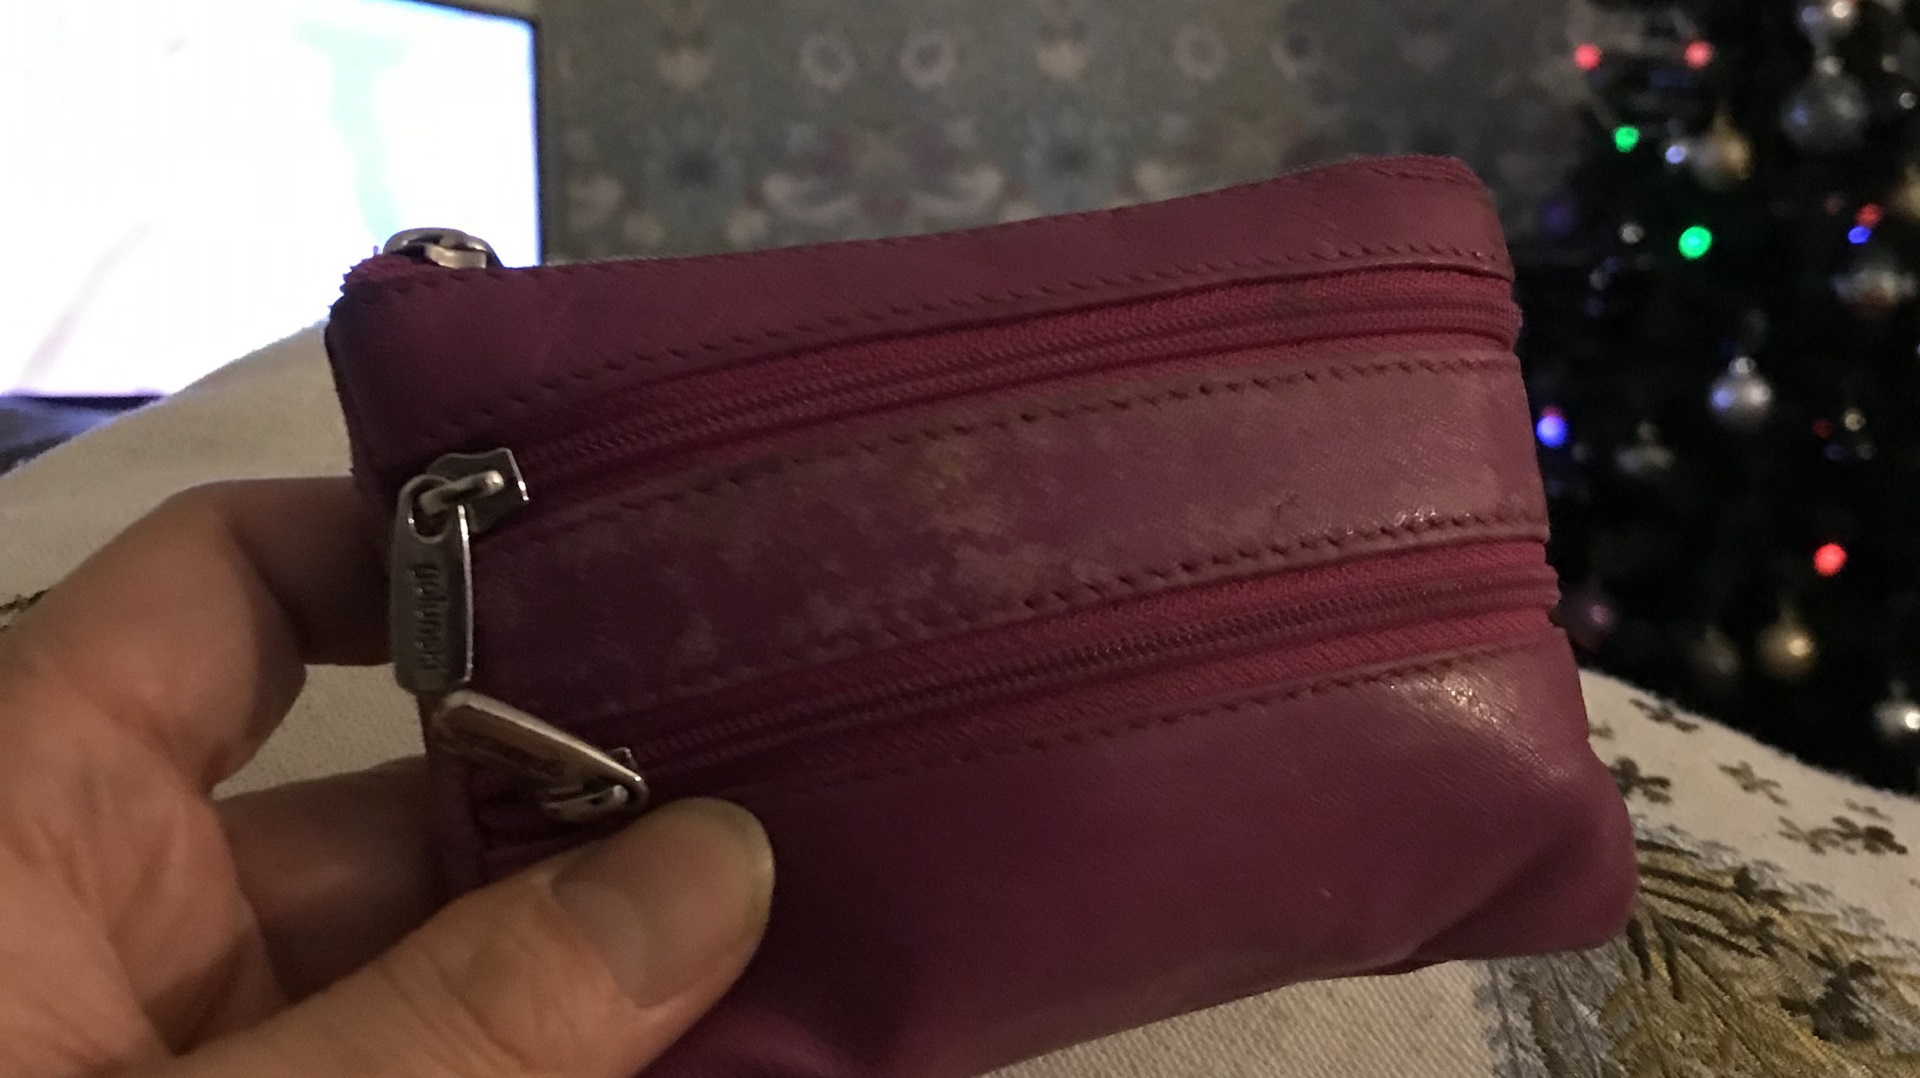 Big Issue vendor returns purse